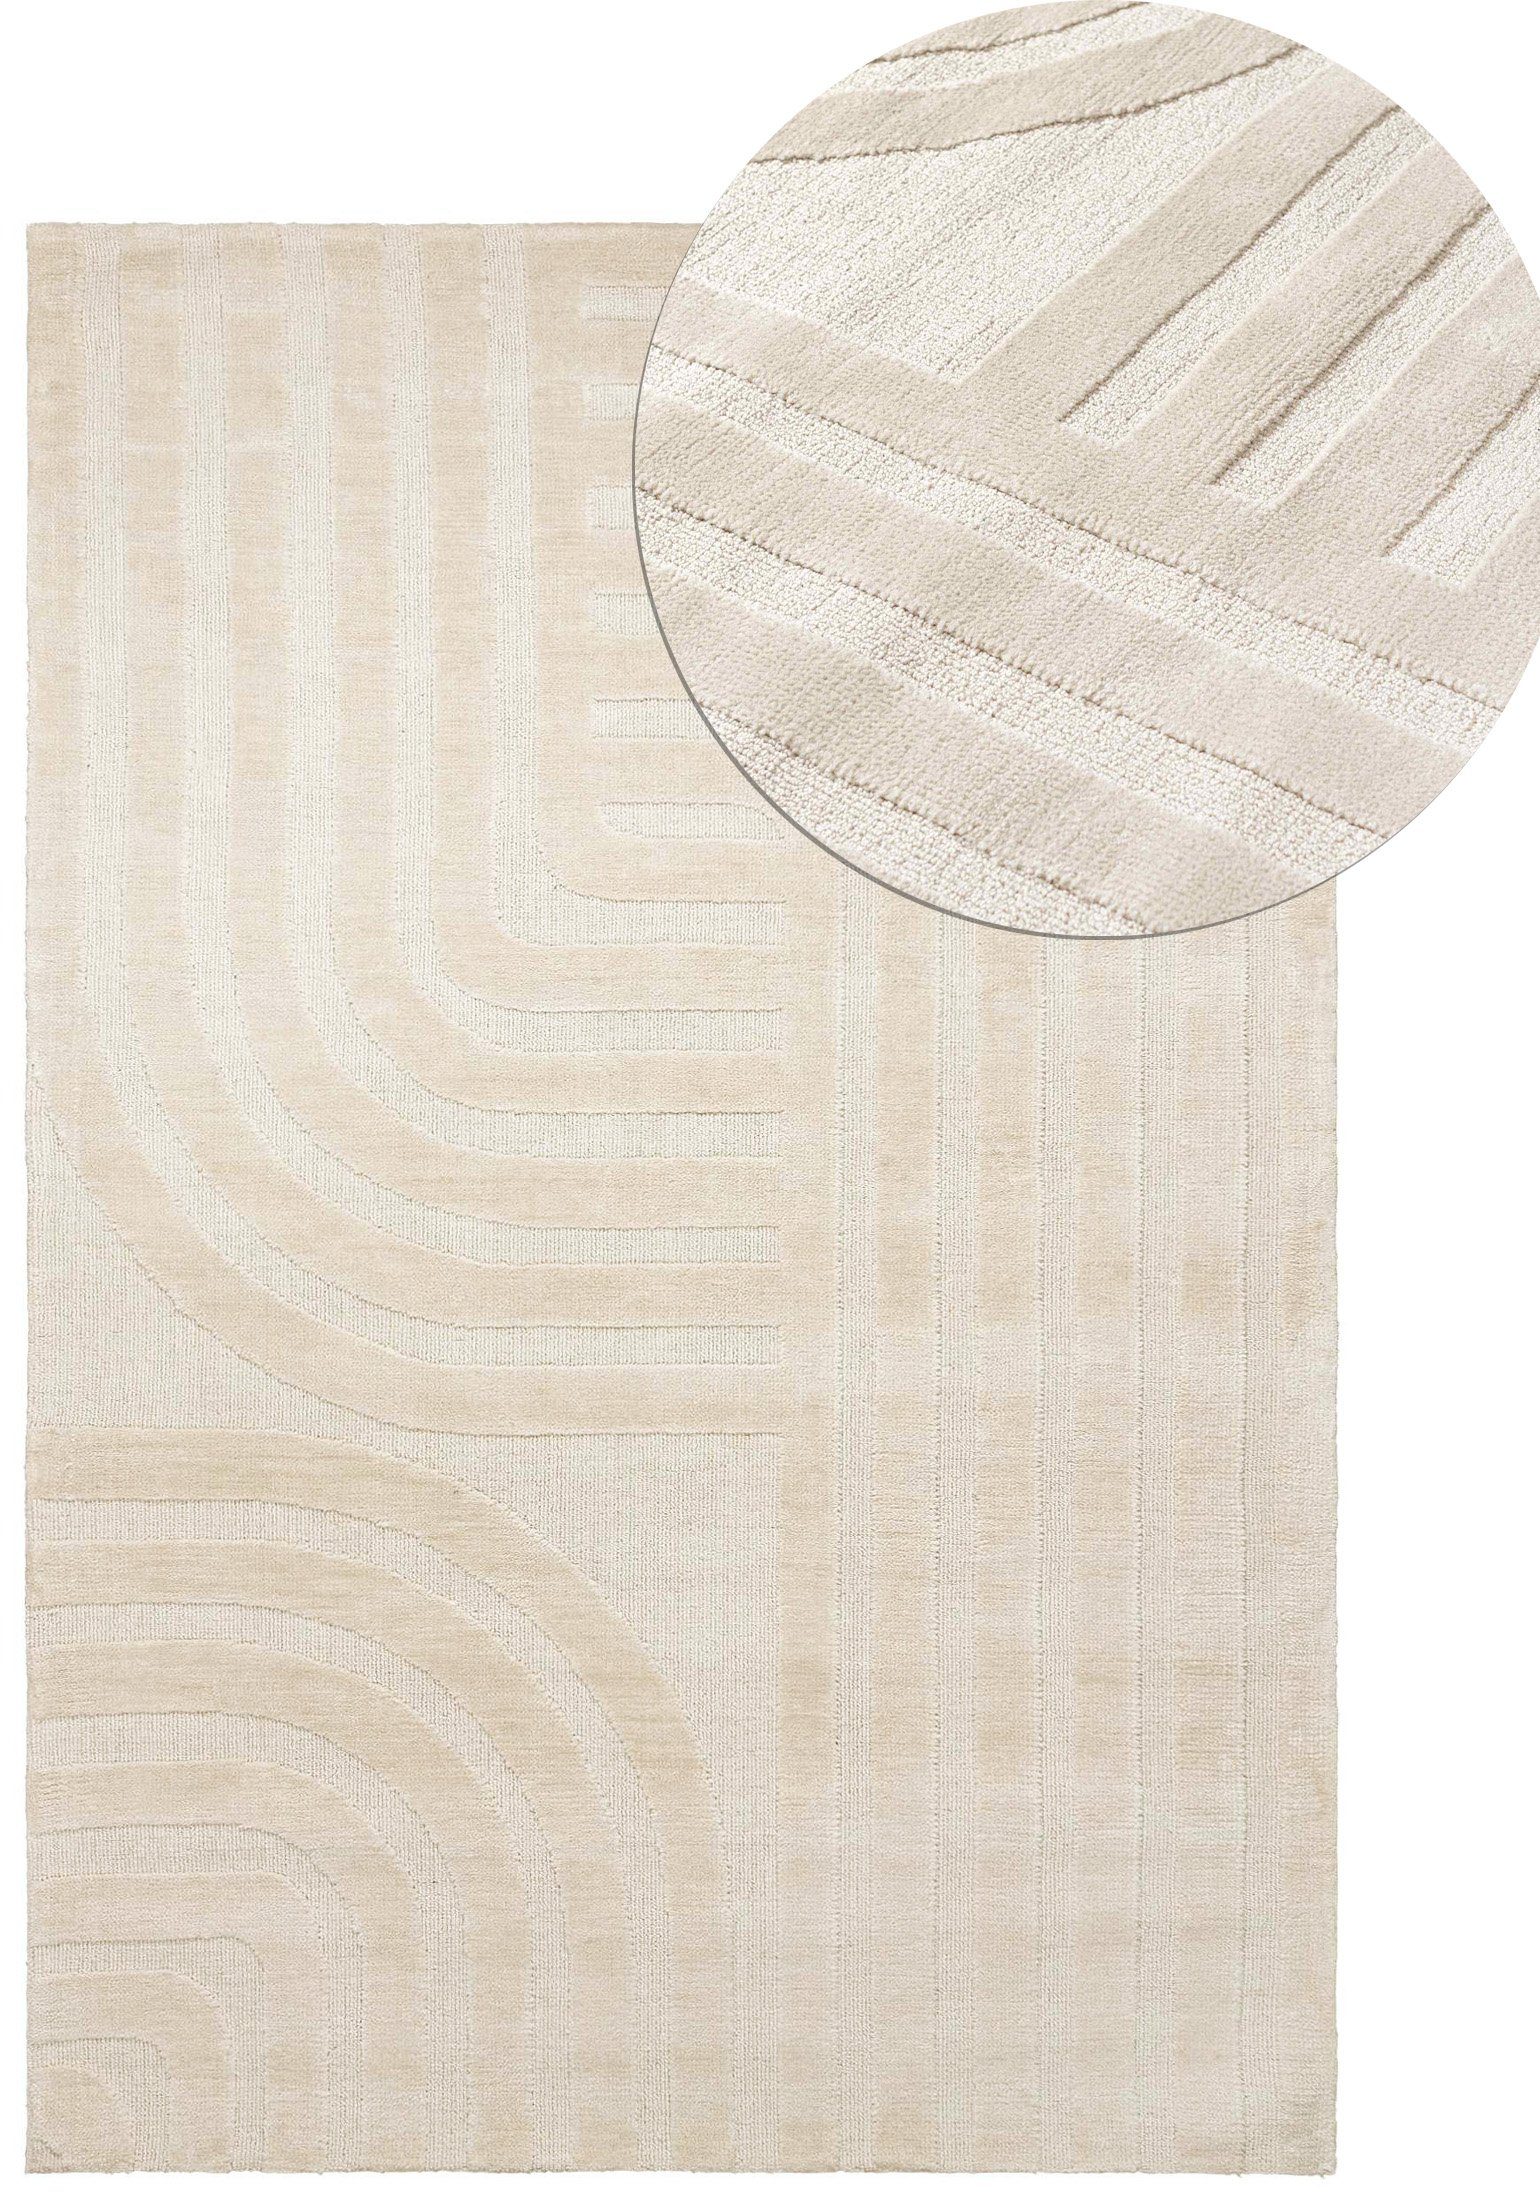 Designteppich Teppich Japandi & Boho Stil Geometrisch 3D Effekt, Mazovia, 80 x 150 cm